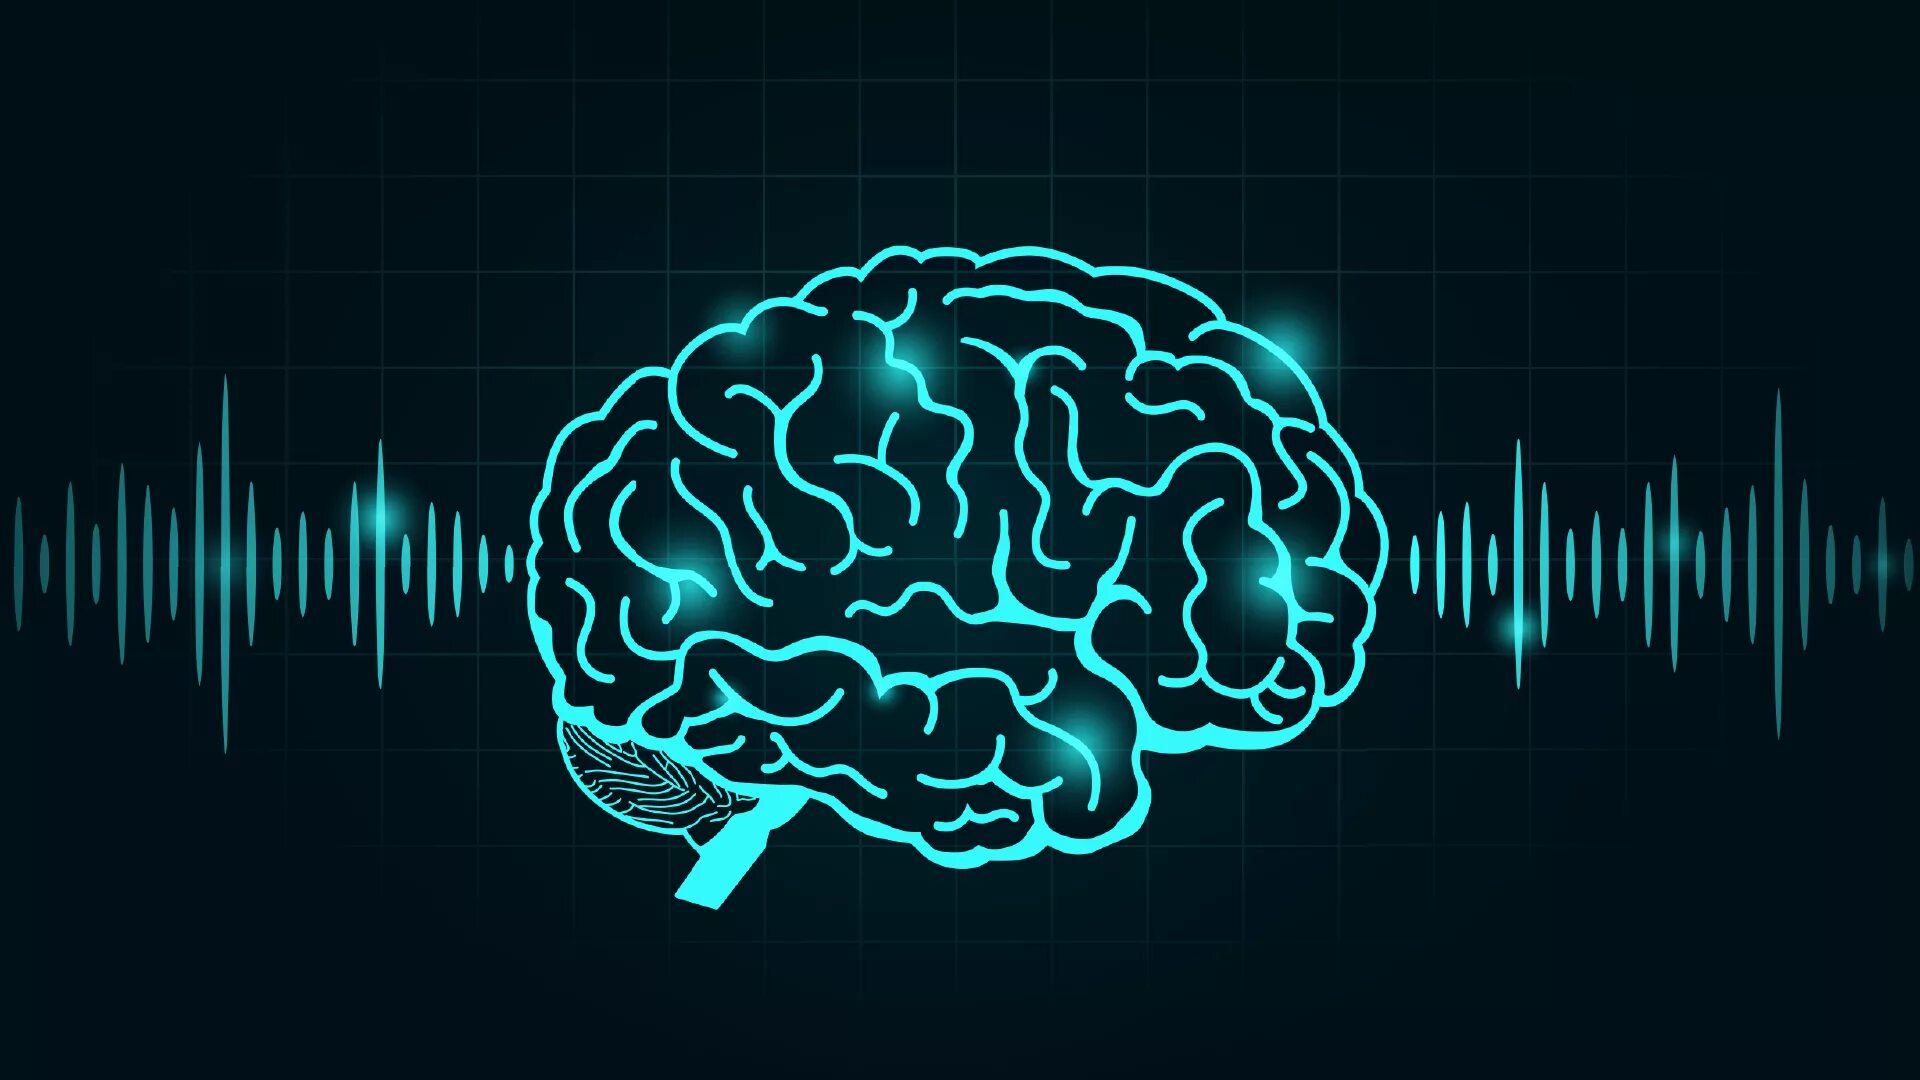 Музыка головного мозга. Электромагнитные волны мозга. Звуковые волны в мозг. Музыкальный мозг. Мозг человека и звуковые волны.